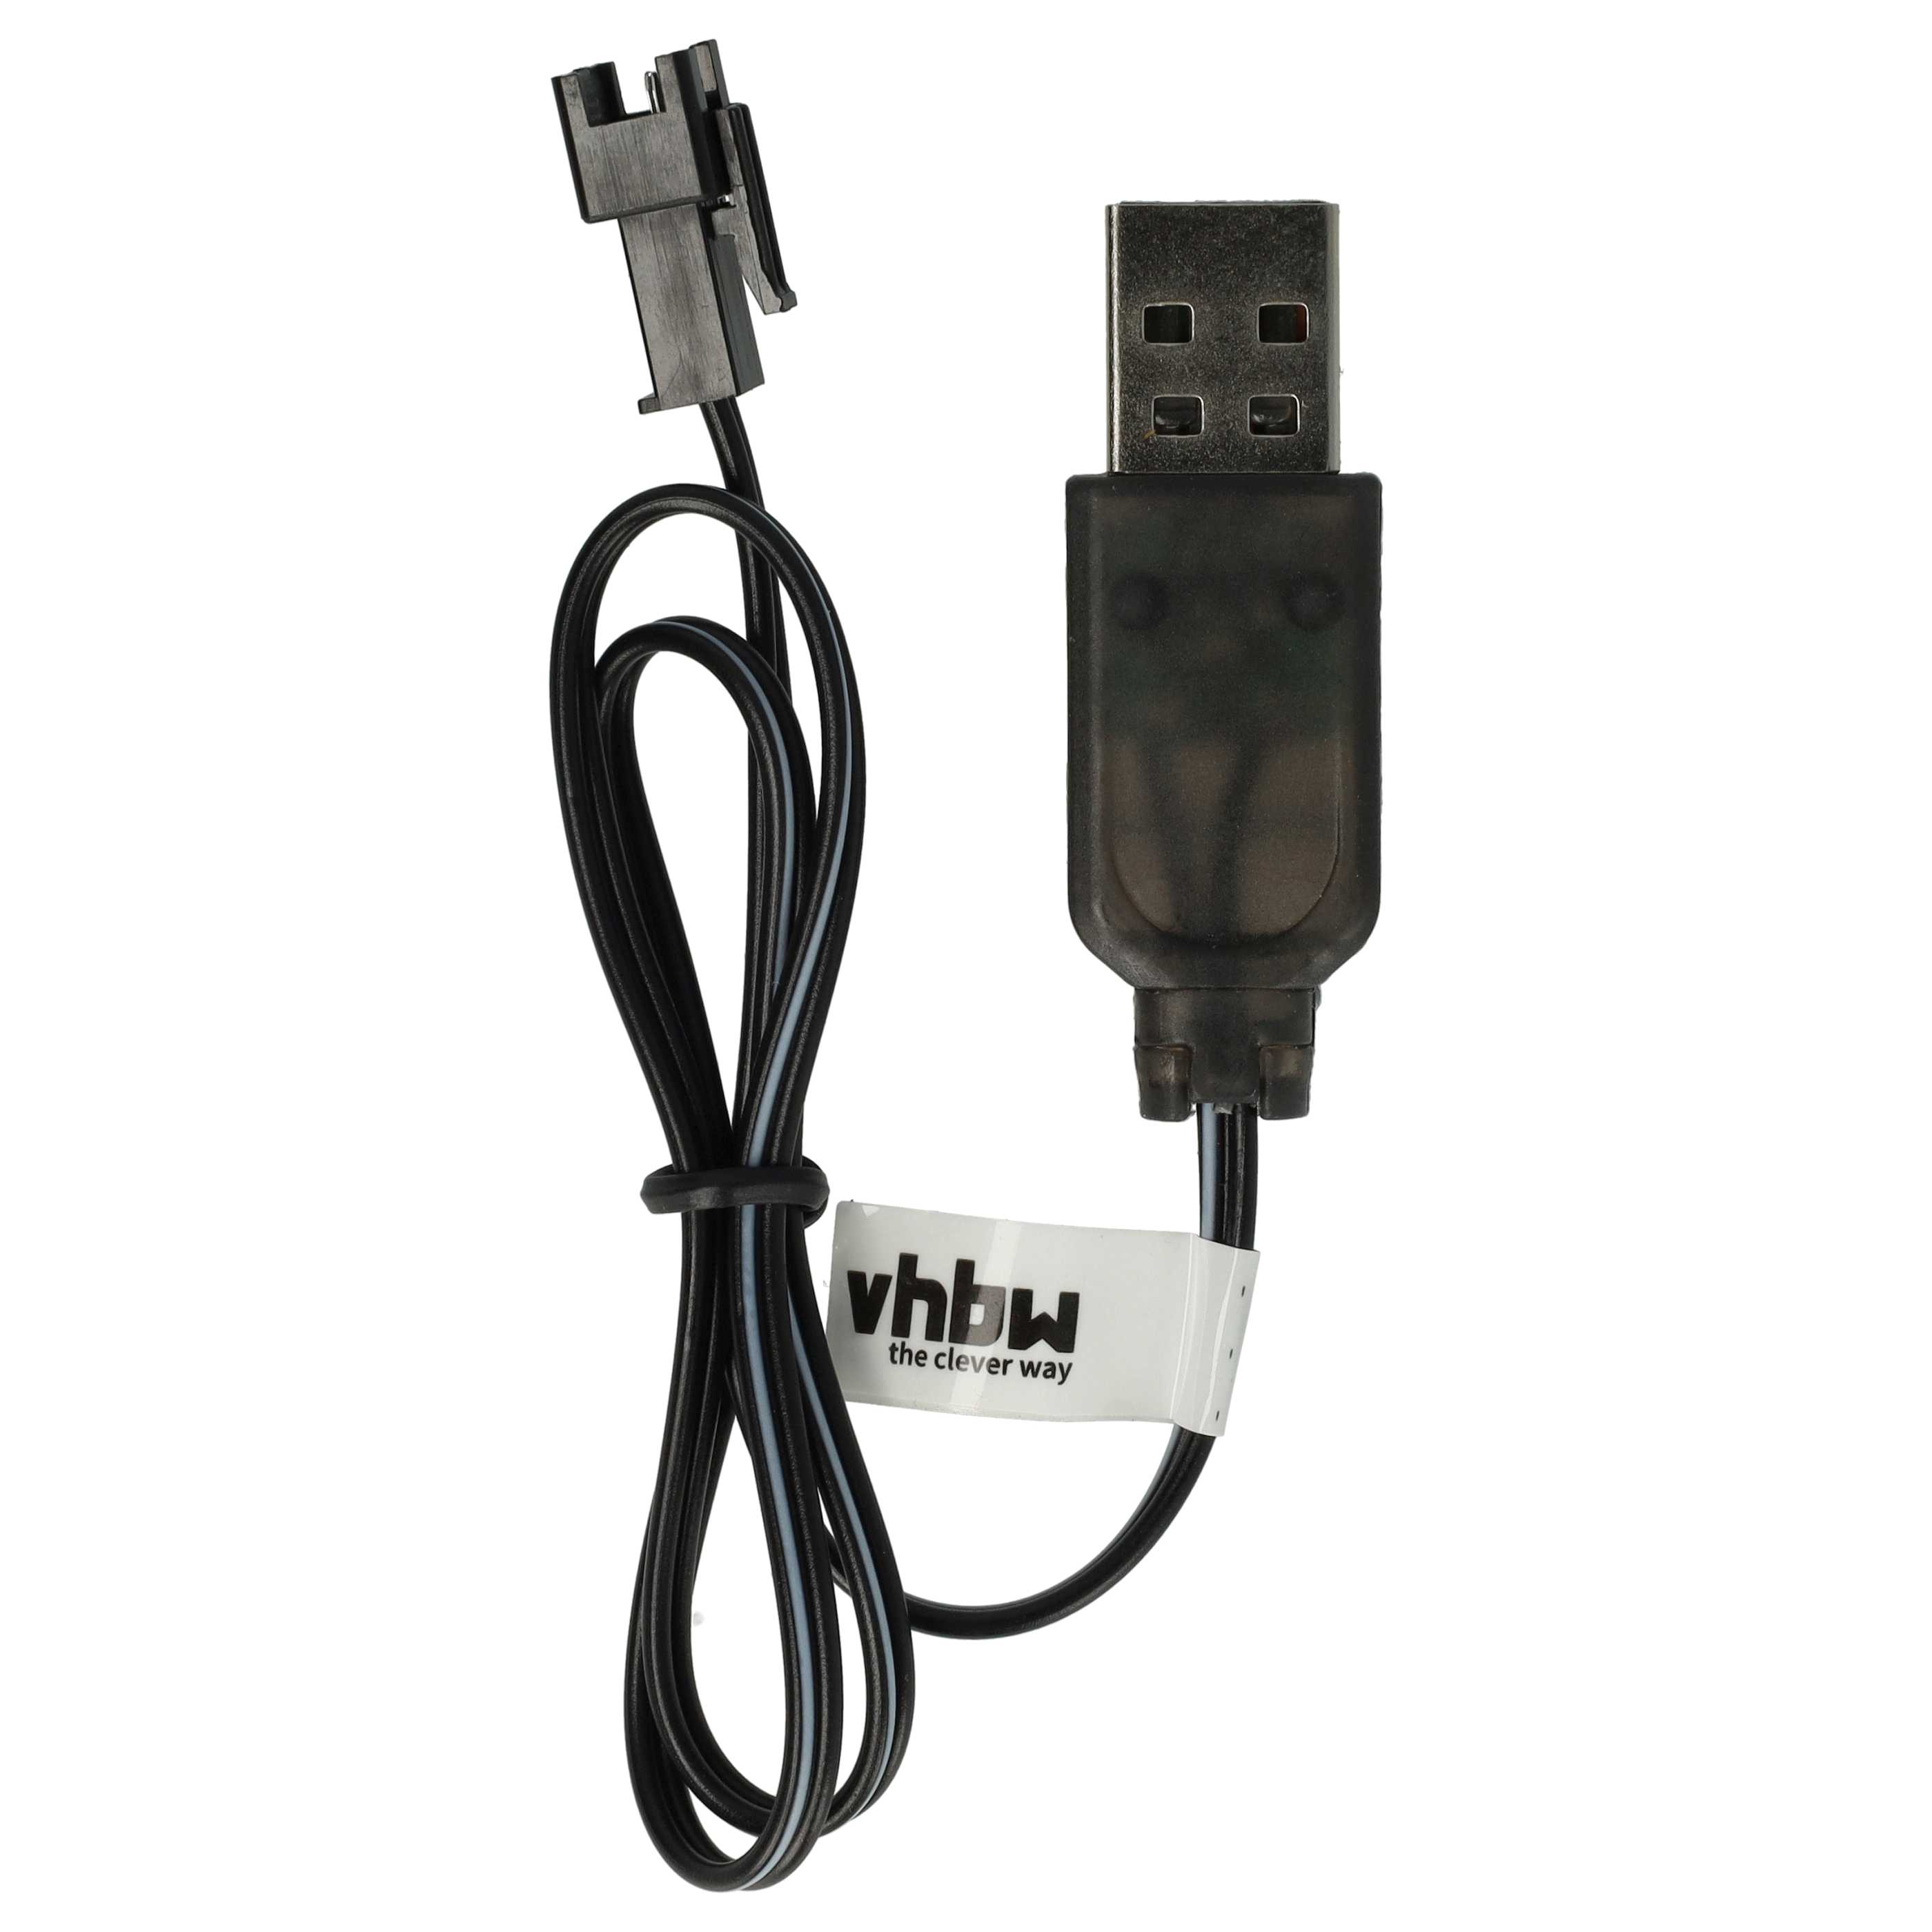 USB-Ladekabel passend für RC-Akkus mit SM-2P-Anschluss, RC-Modellbau Akkupacks - 60cm 3,6V